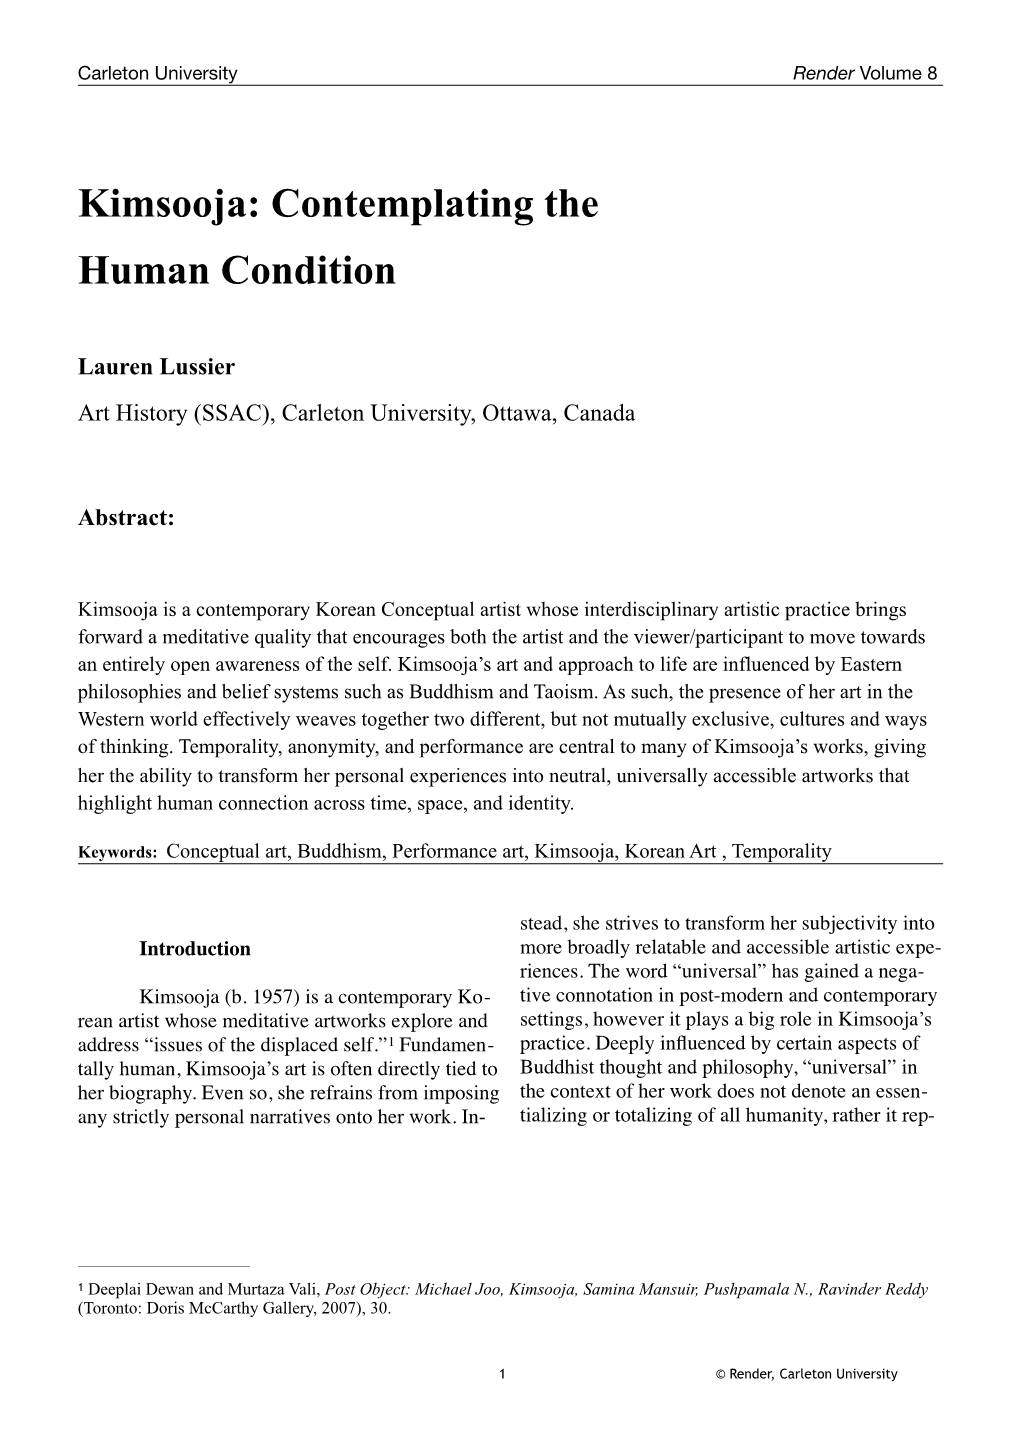 Kimsooja: Contemplating the Human Condition